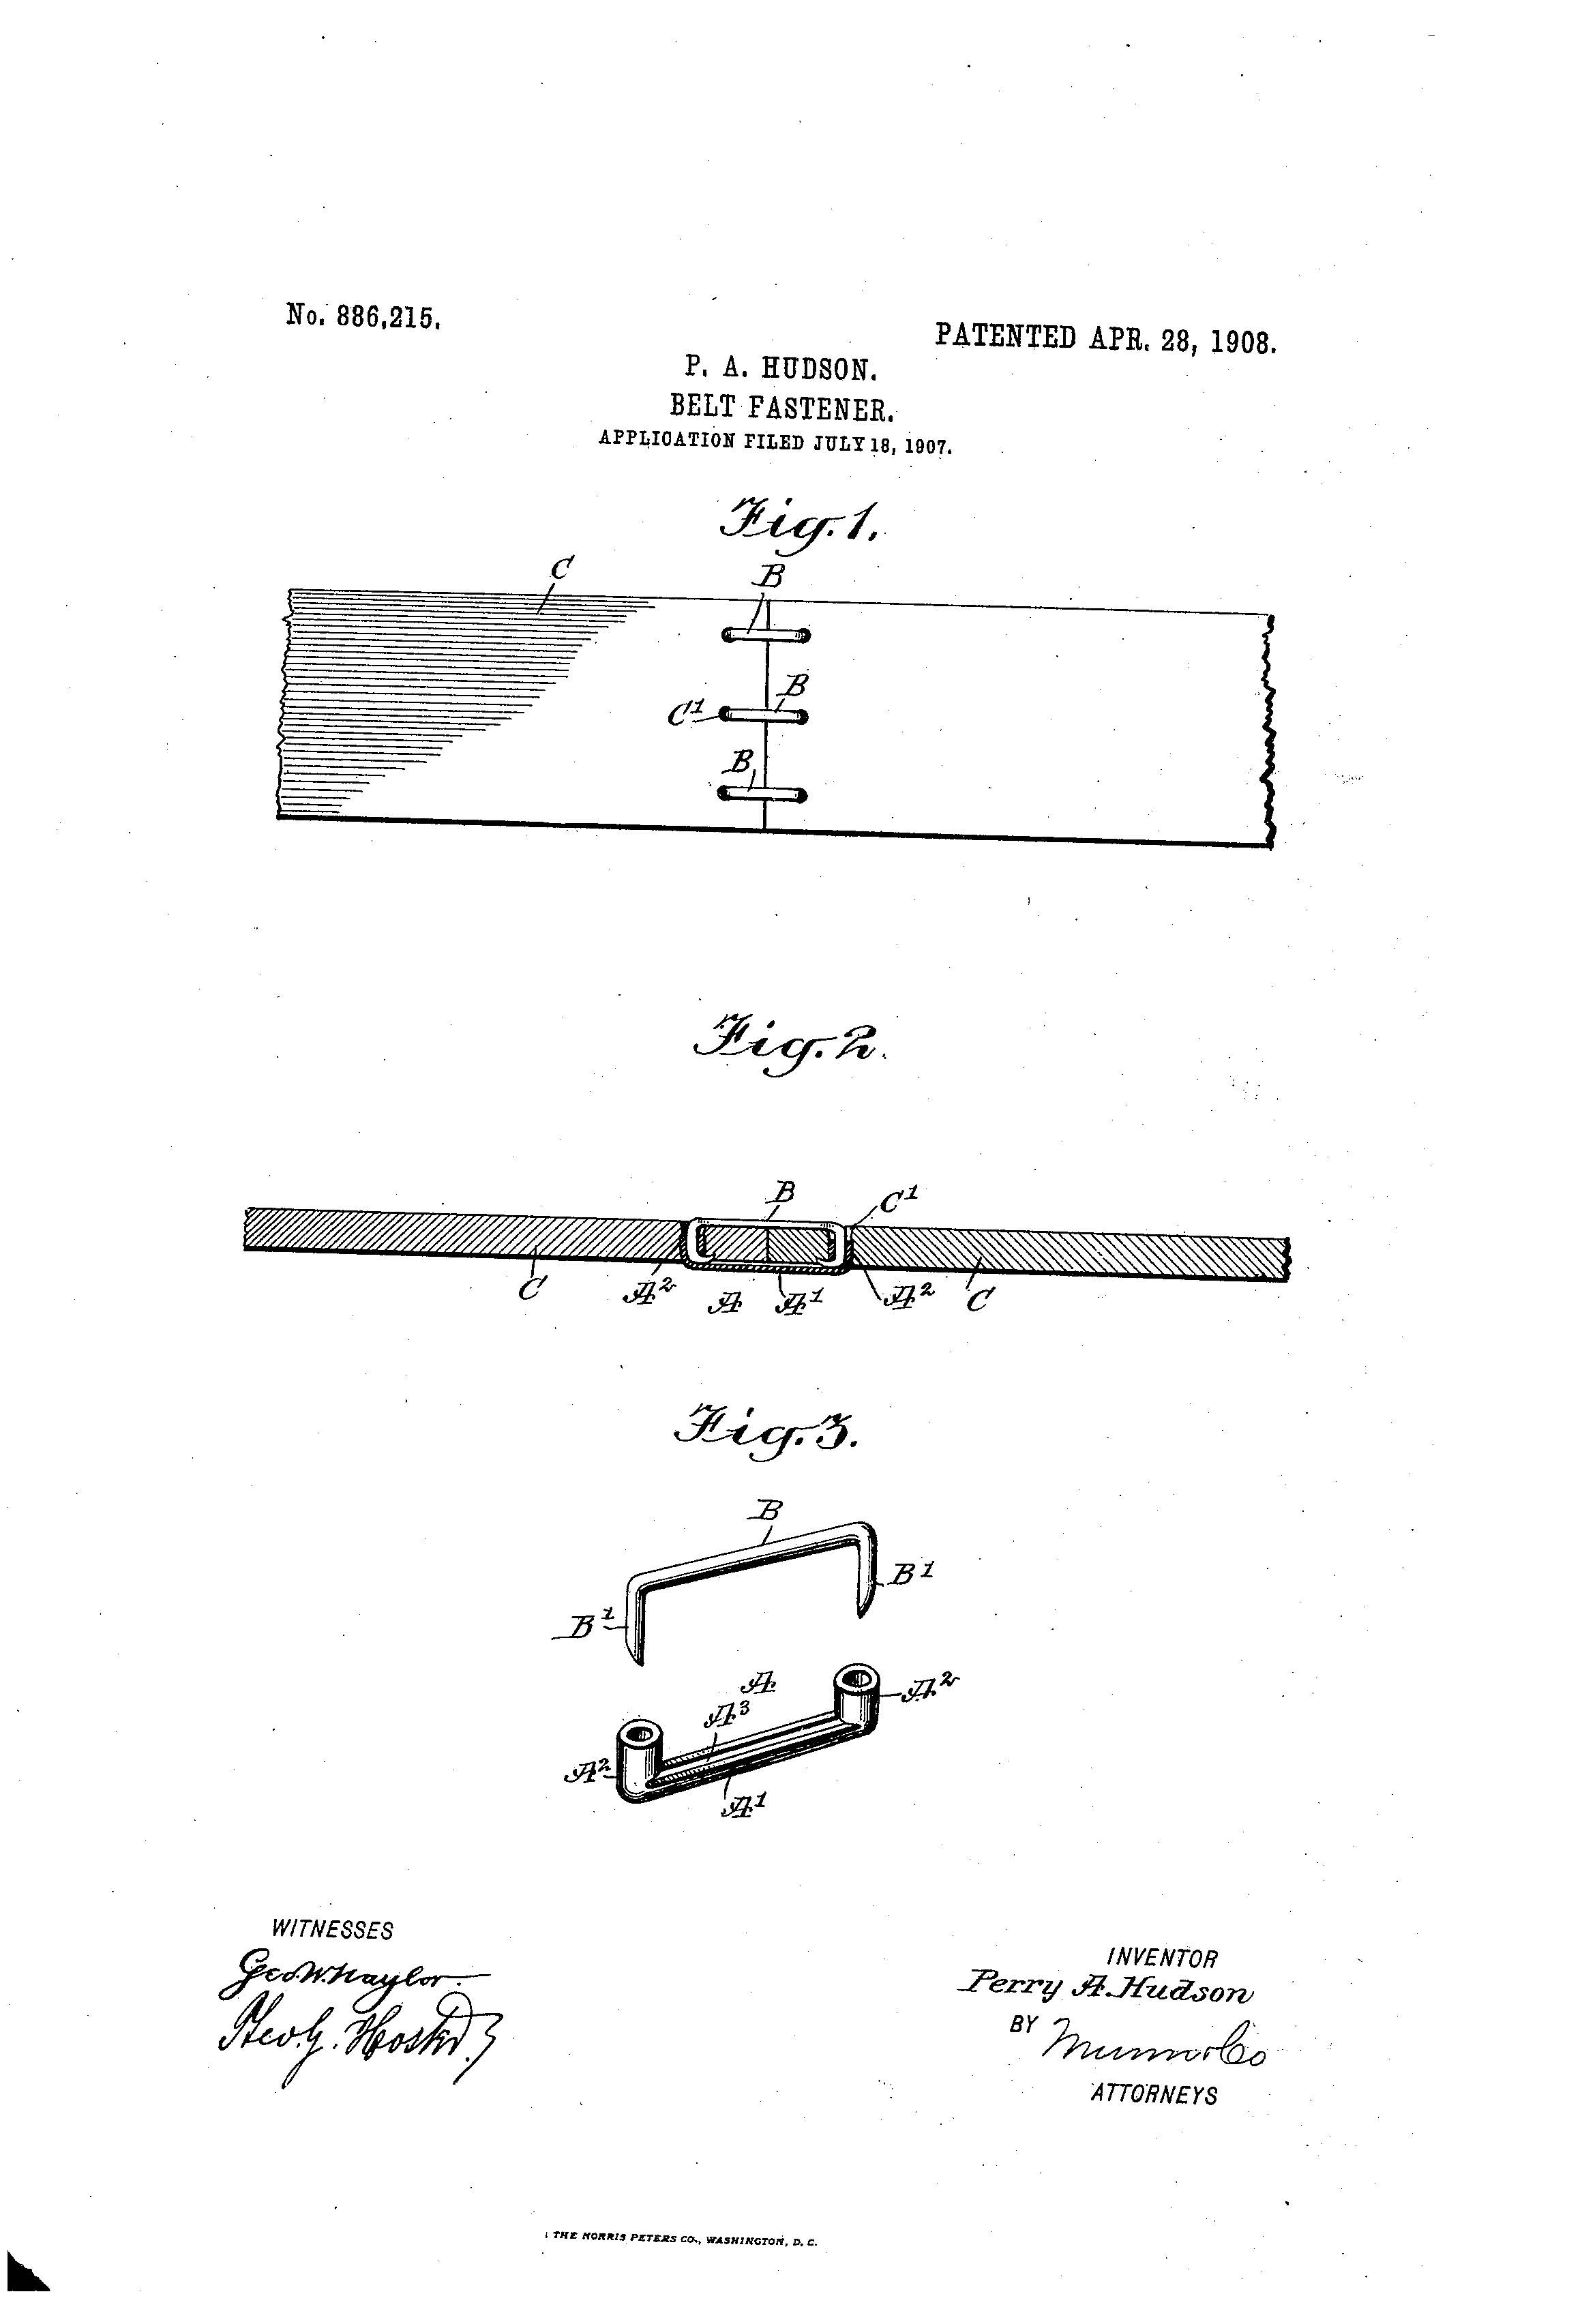 Belt Fastener Patent